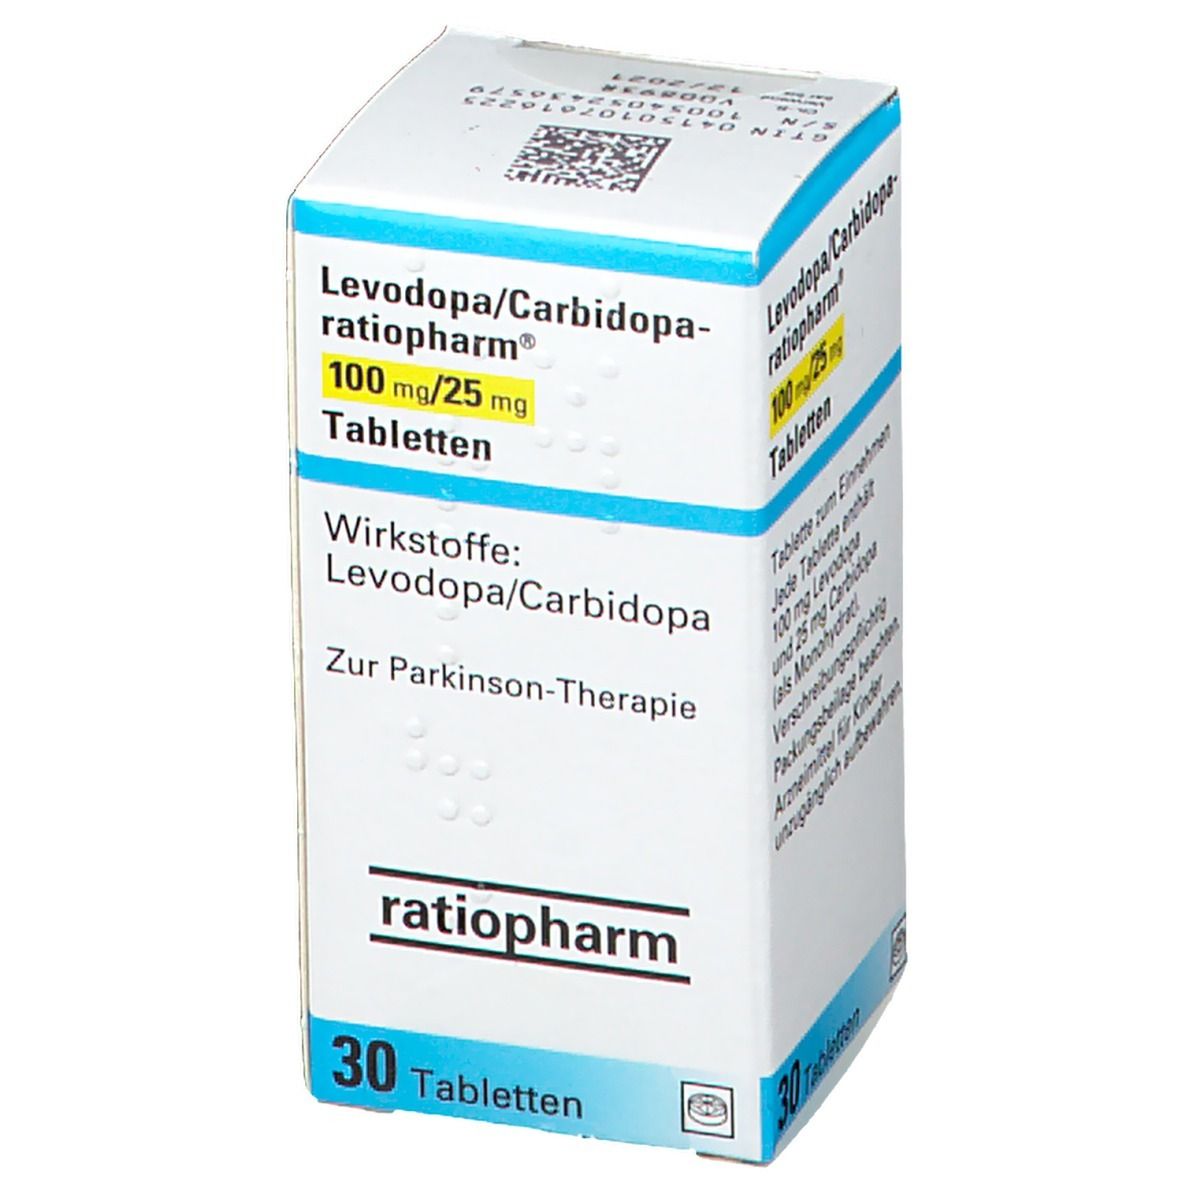 Levodopa/Carbidopa-ratiopharm® 100 mg/25 mg